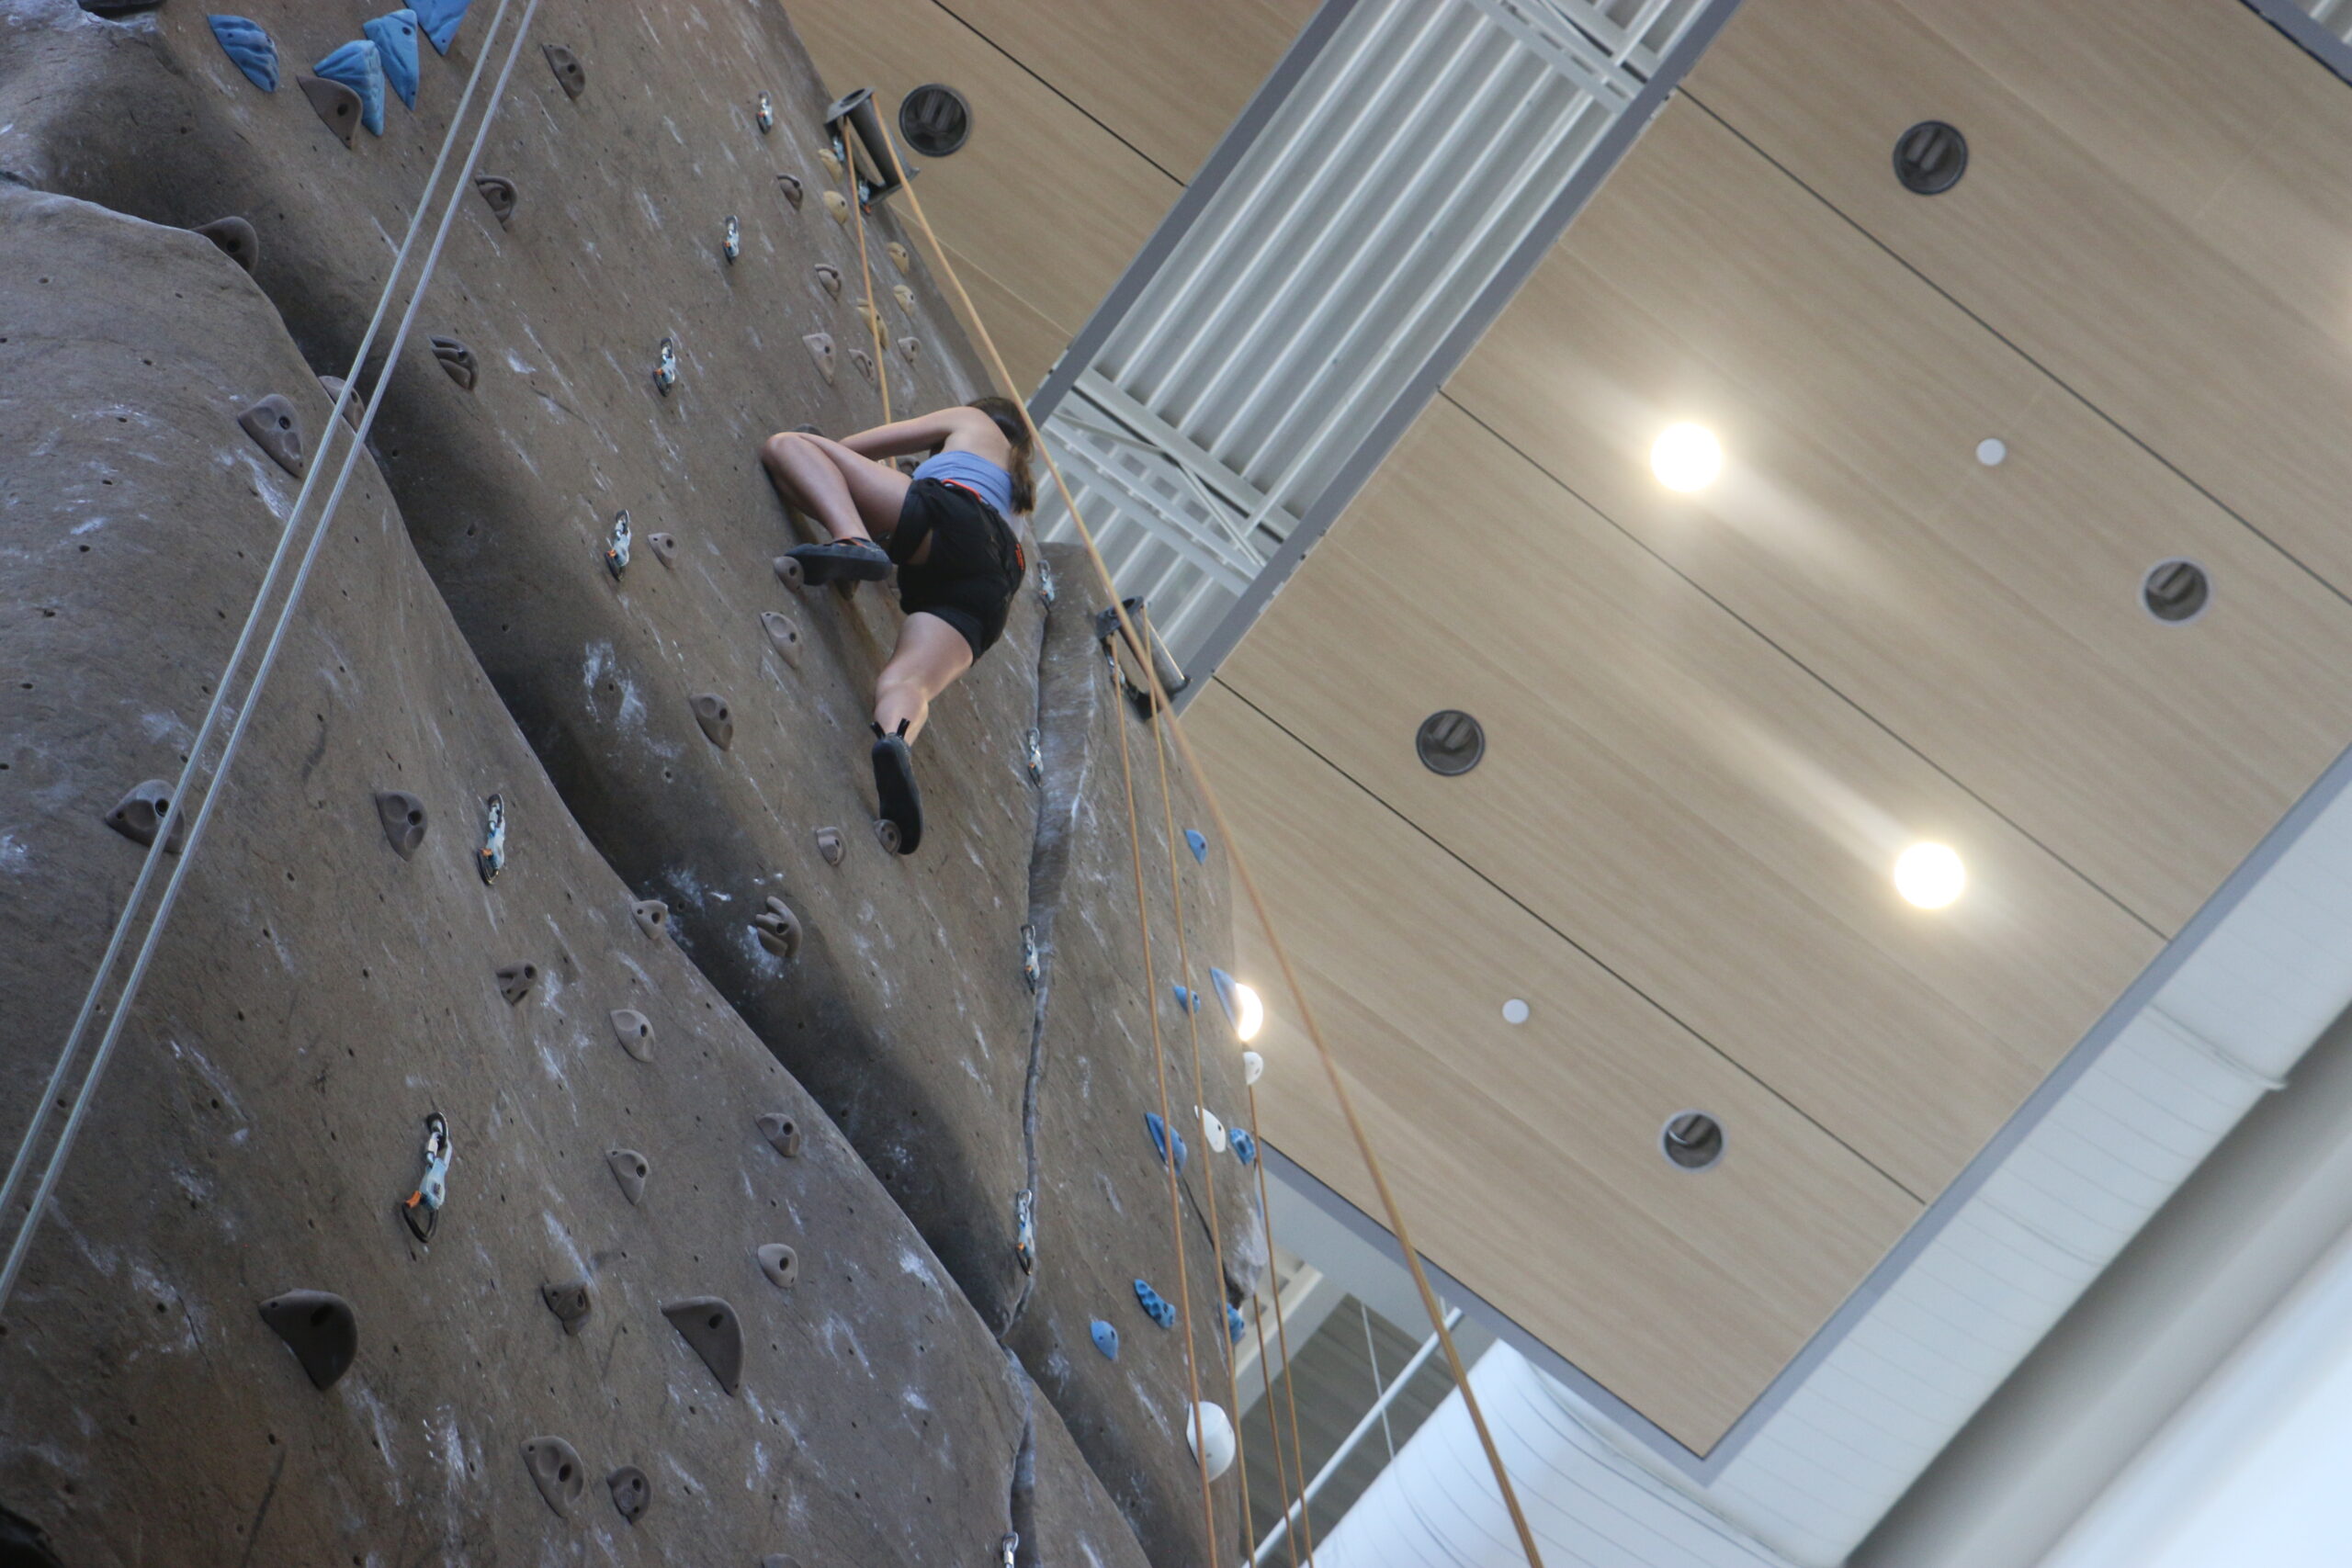 Climbing Gym empowers women, creates safe environment to rock climb